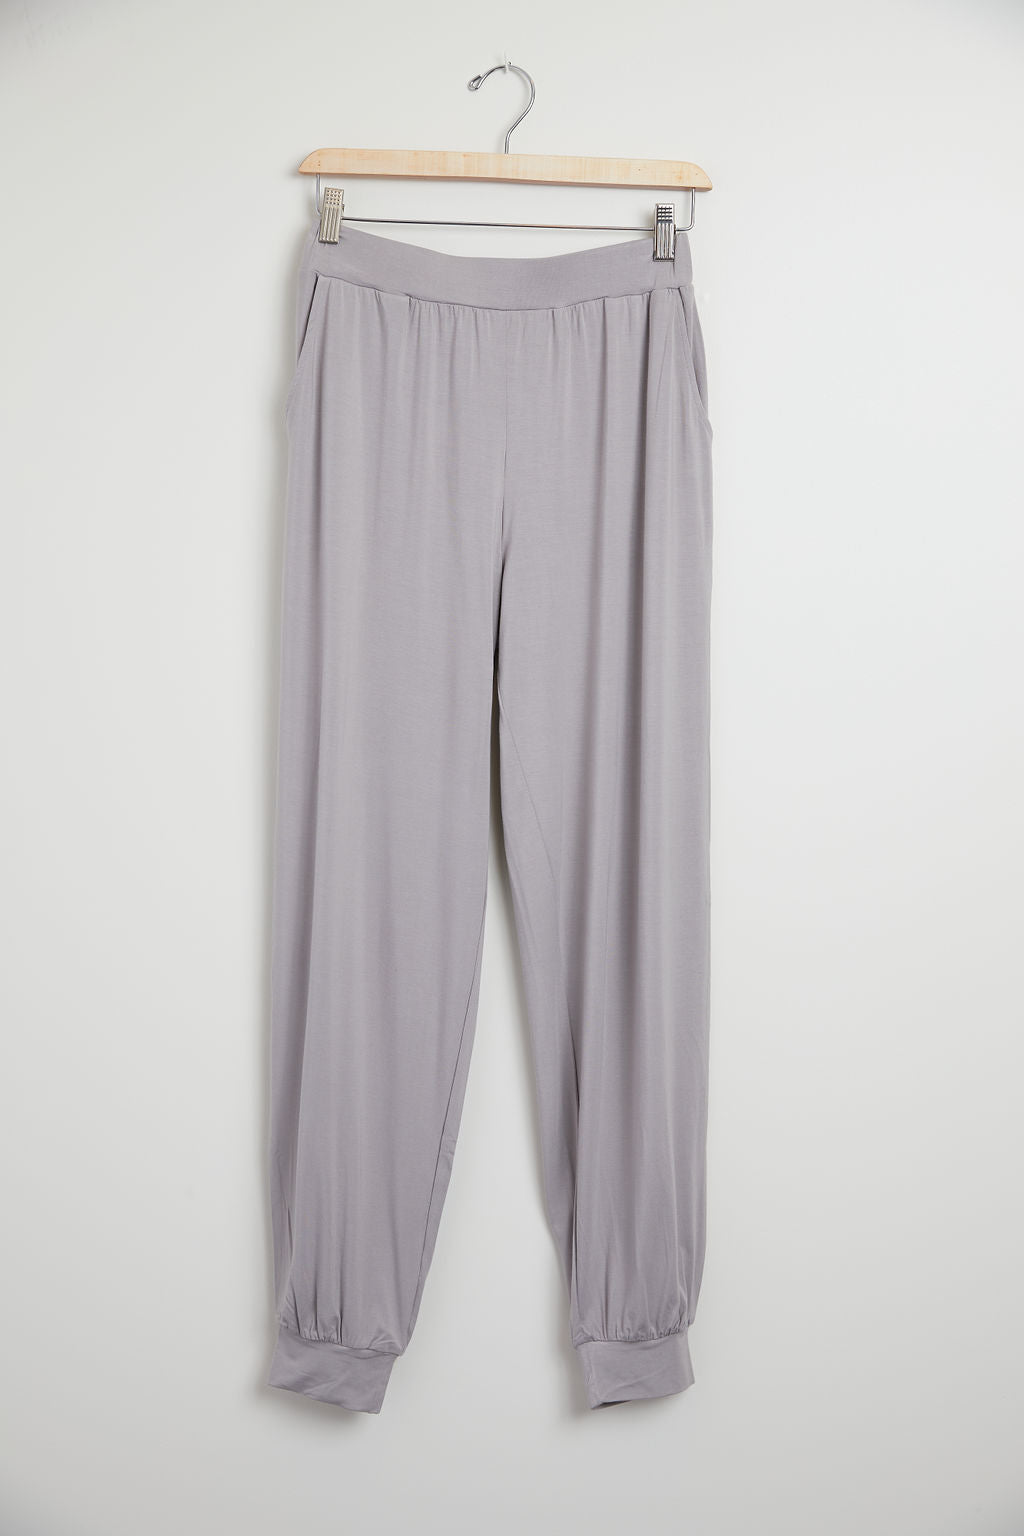 Long Sleeve 2 Piece Loungewear Set made from Bamboo Viscose - Pink